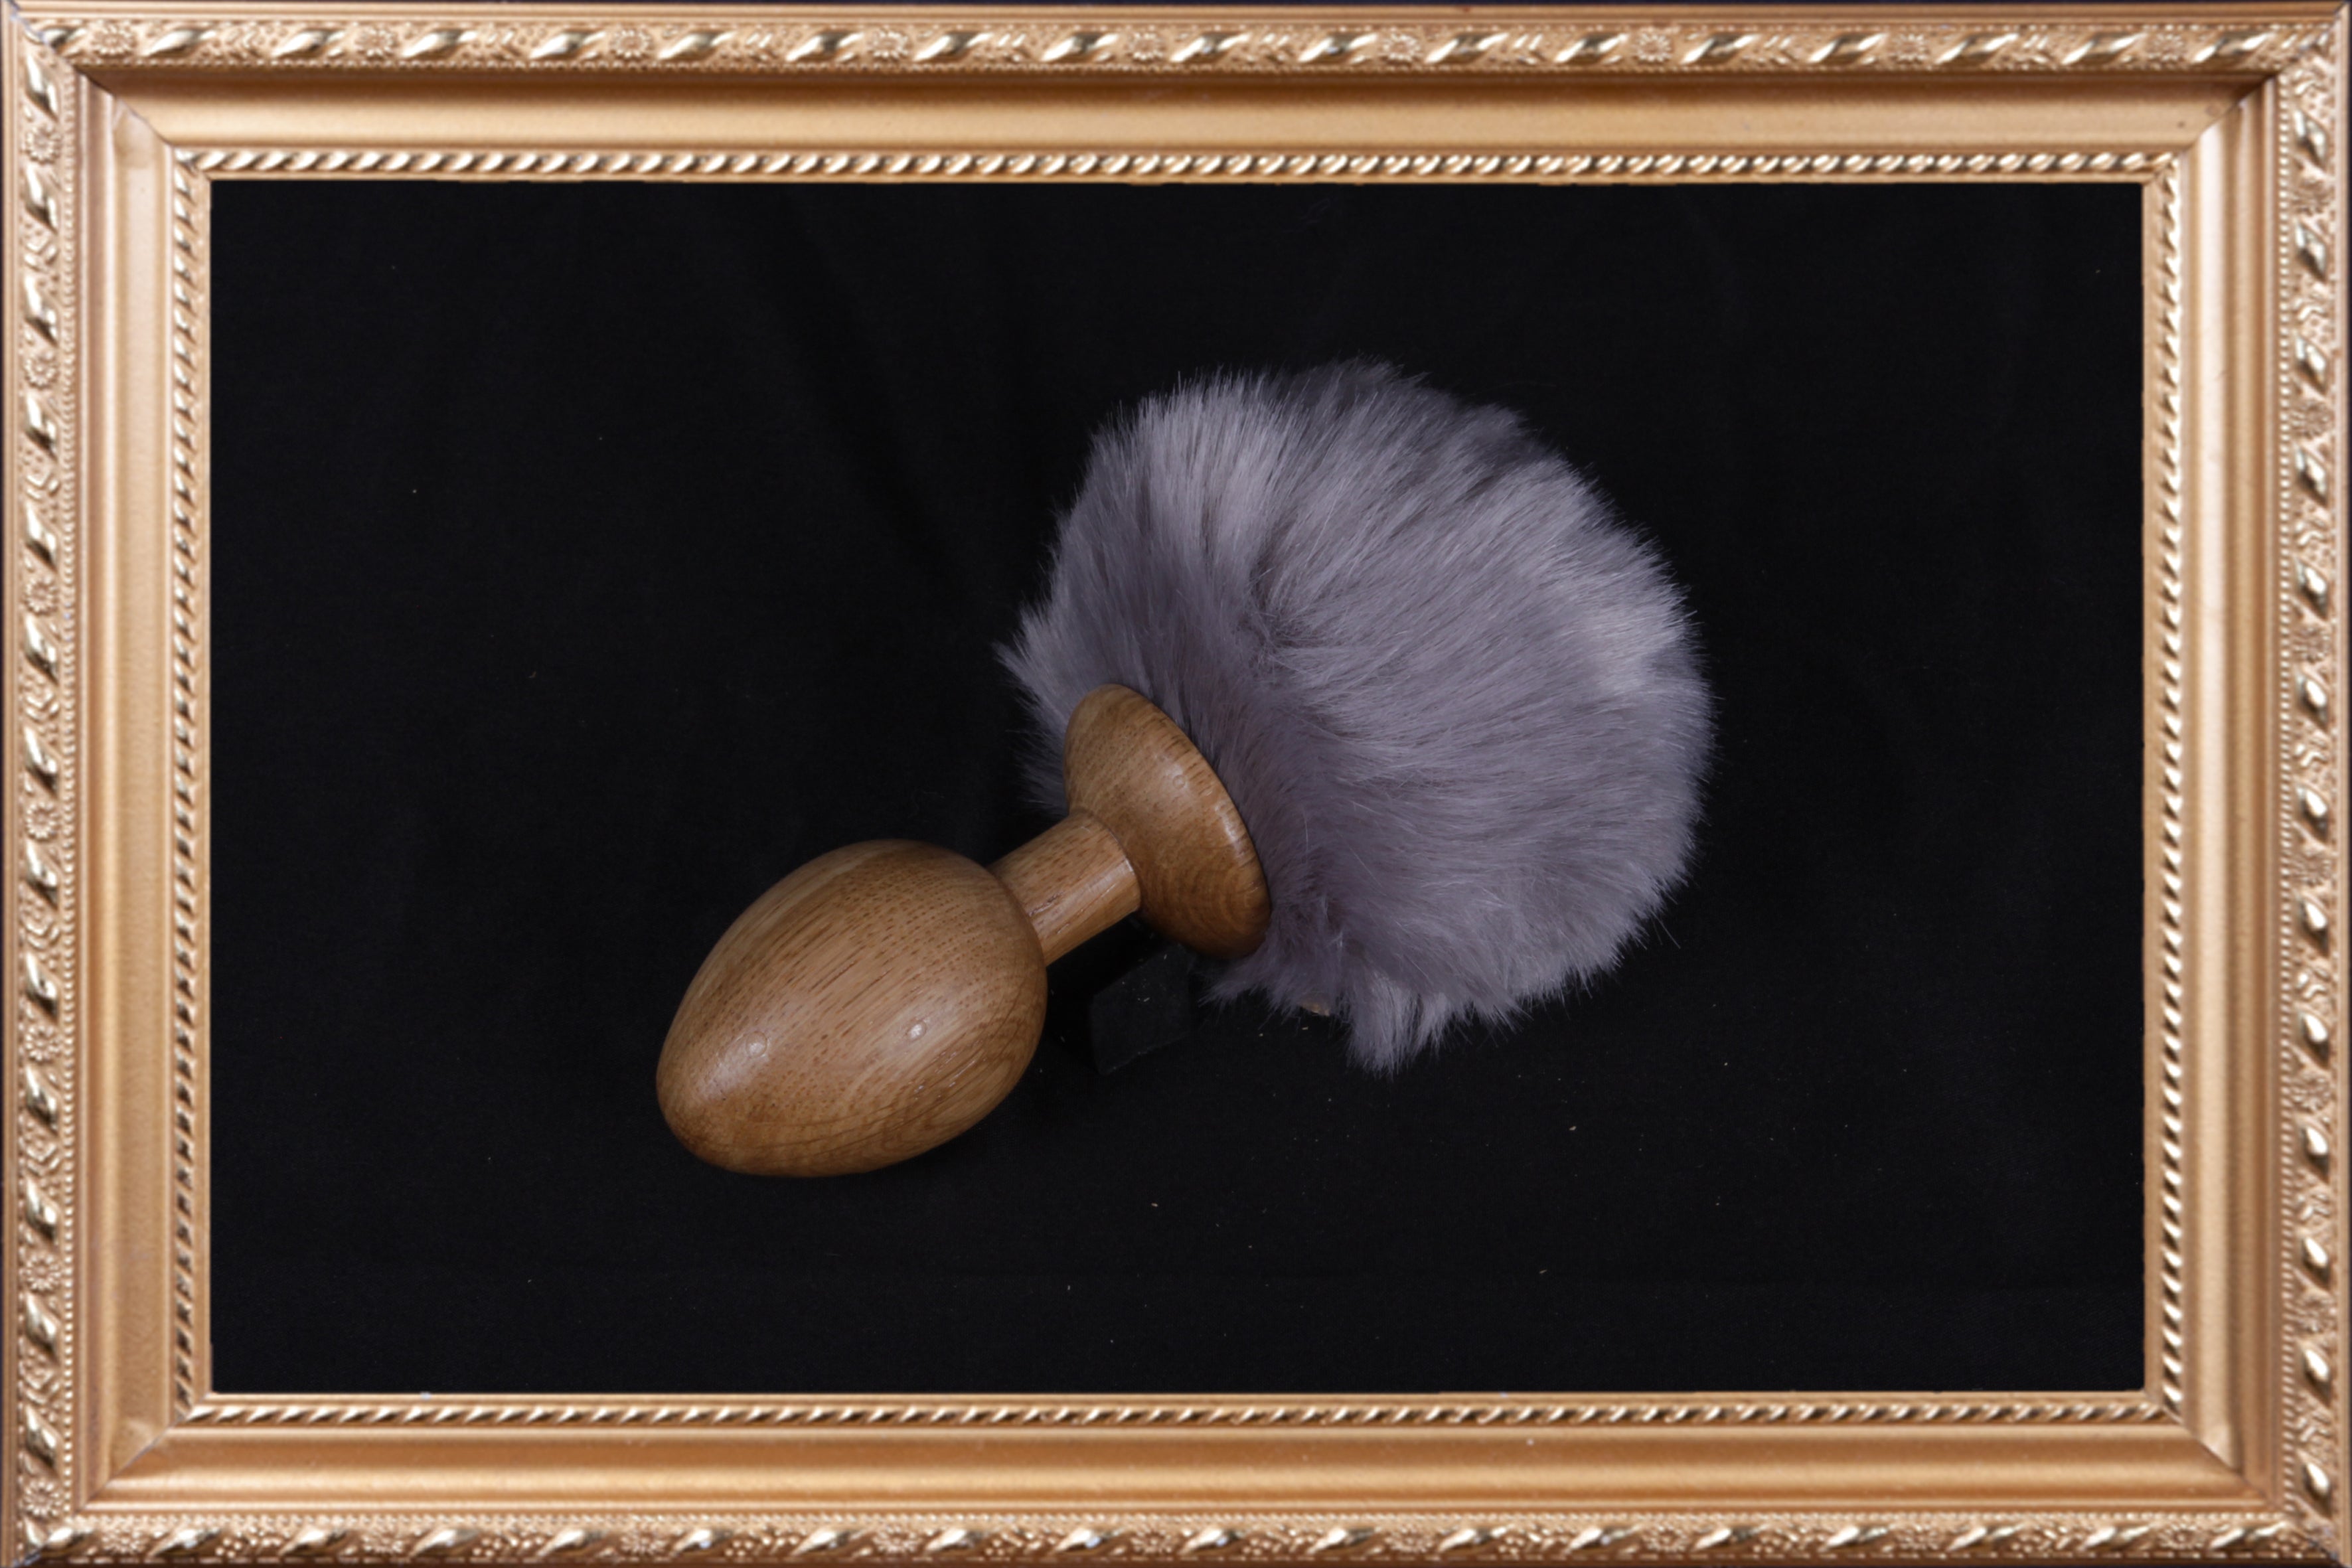 OACHKATZLSCHWOAF Eiche Hase Grau || Wooden Furry Tail Anal Butt Plug Holz|| Fox Bunny Raccoon || Sex Toy || Handmade by Holz-Knecht.at